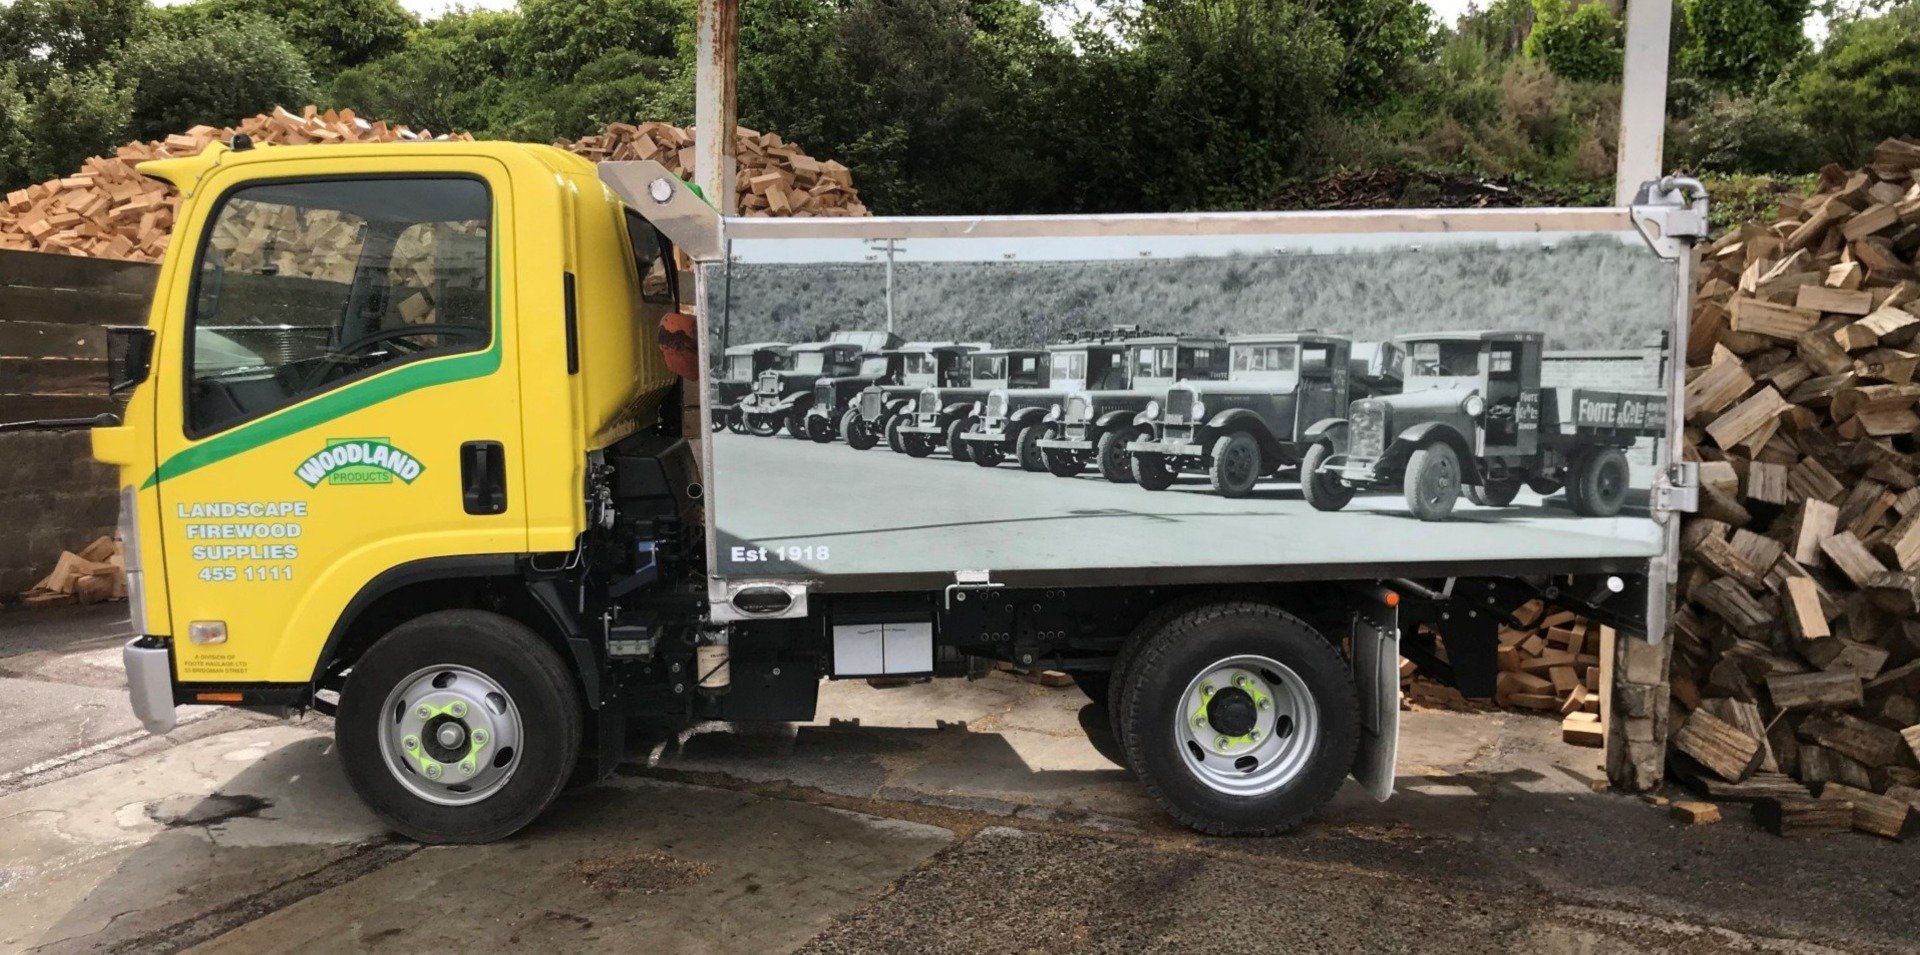 Truck carrying landscaping supplies in Dunedin